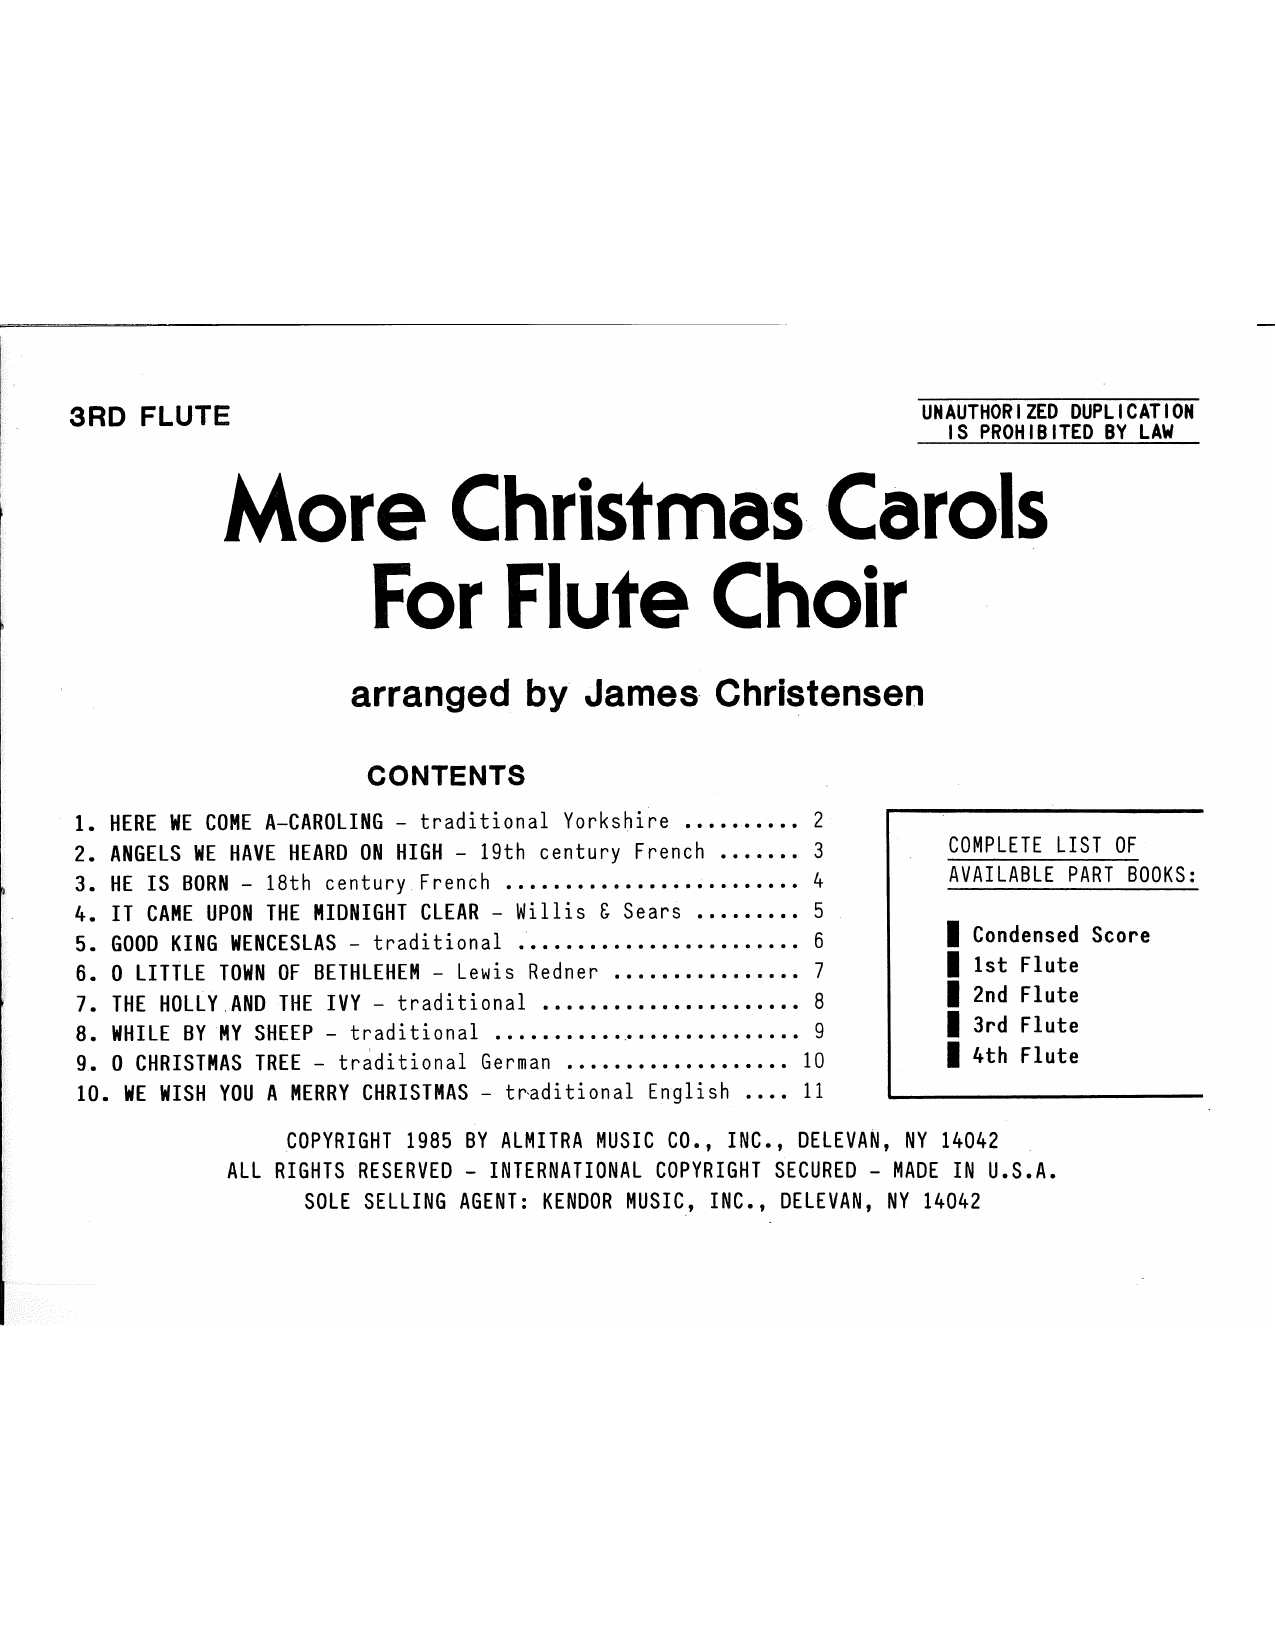 Download Various More Christmas Carols For Flute Choir ( Sheet Music